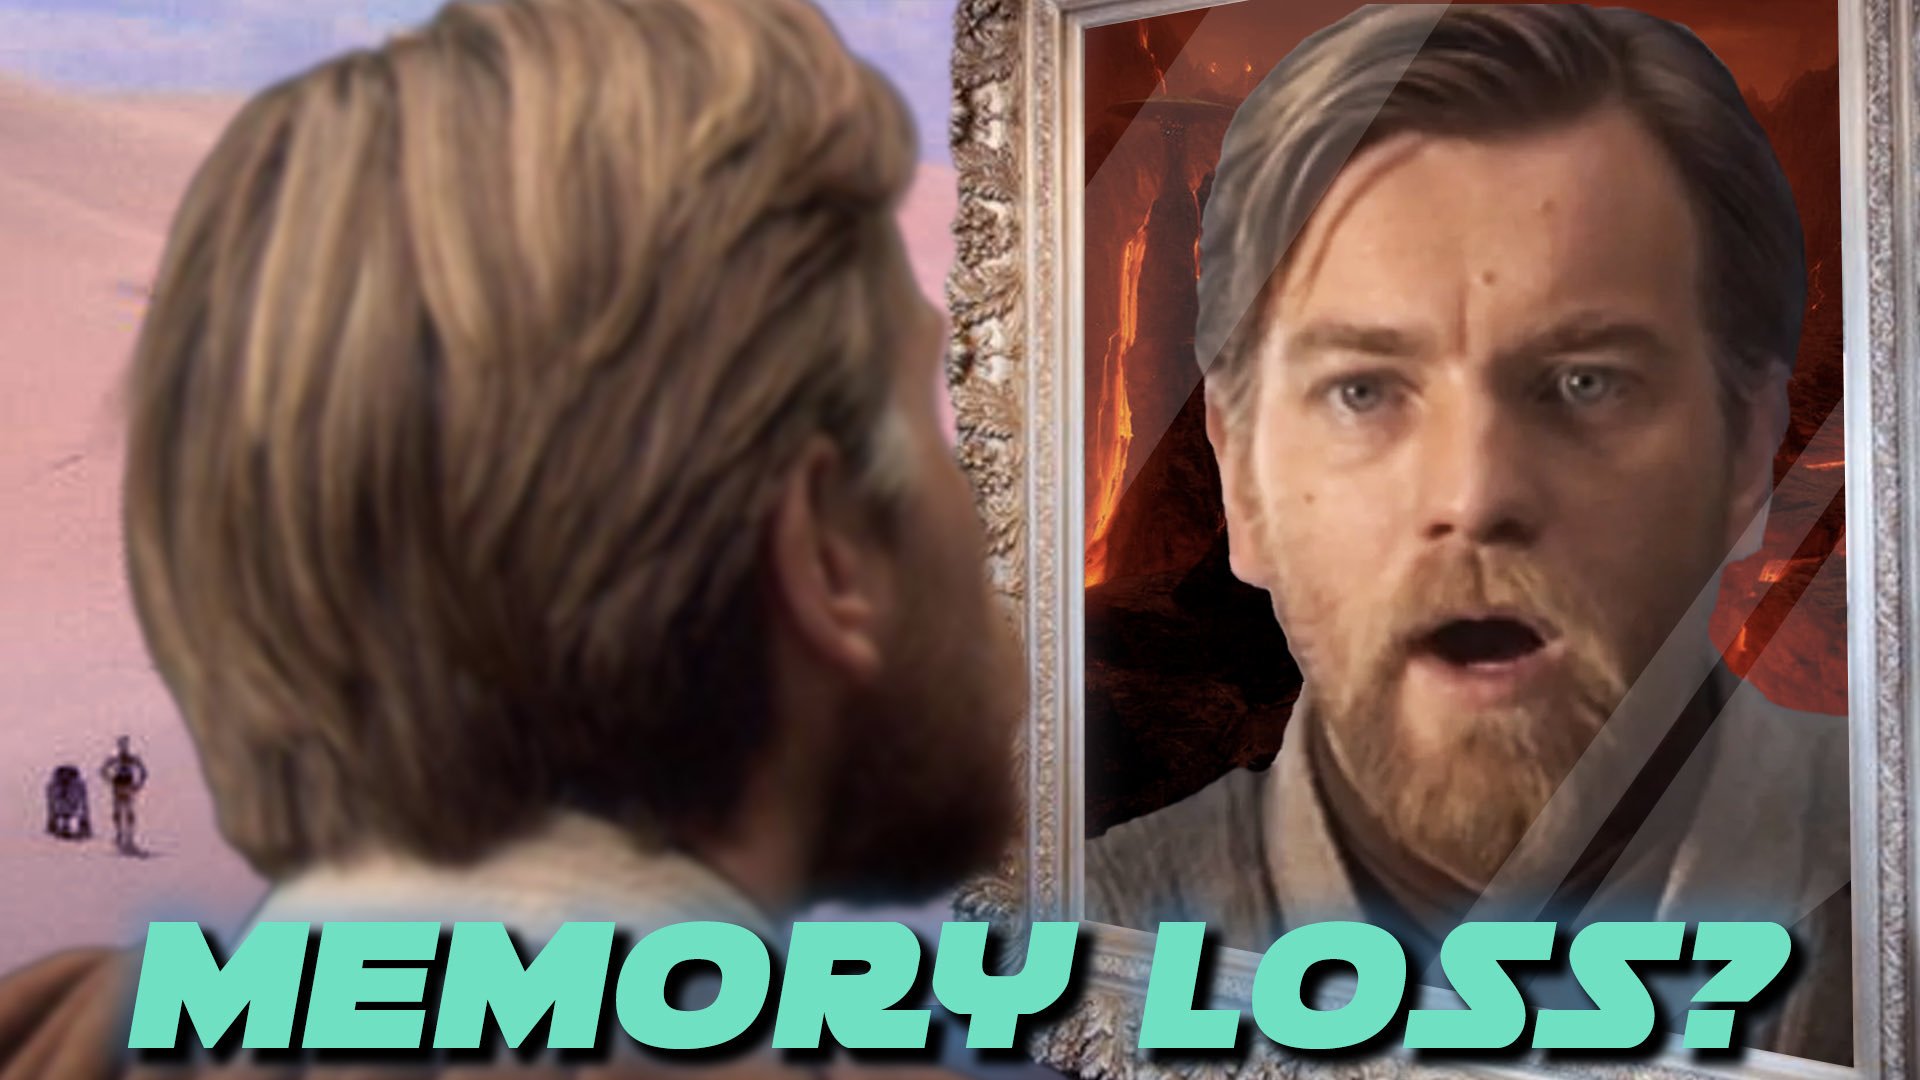 Updated: 'Obi-Wan Kenobi' Cast Revealed With Owen and Beru Returning;  Filming Starts in April, Moses Ingram to Have Major Role - Star Wars News  Net